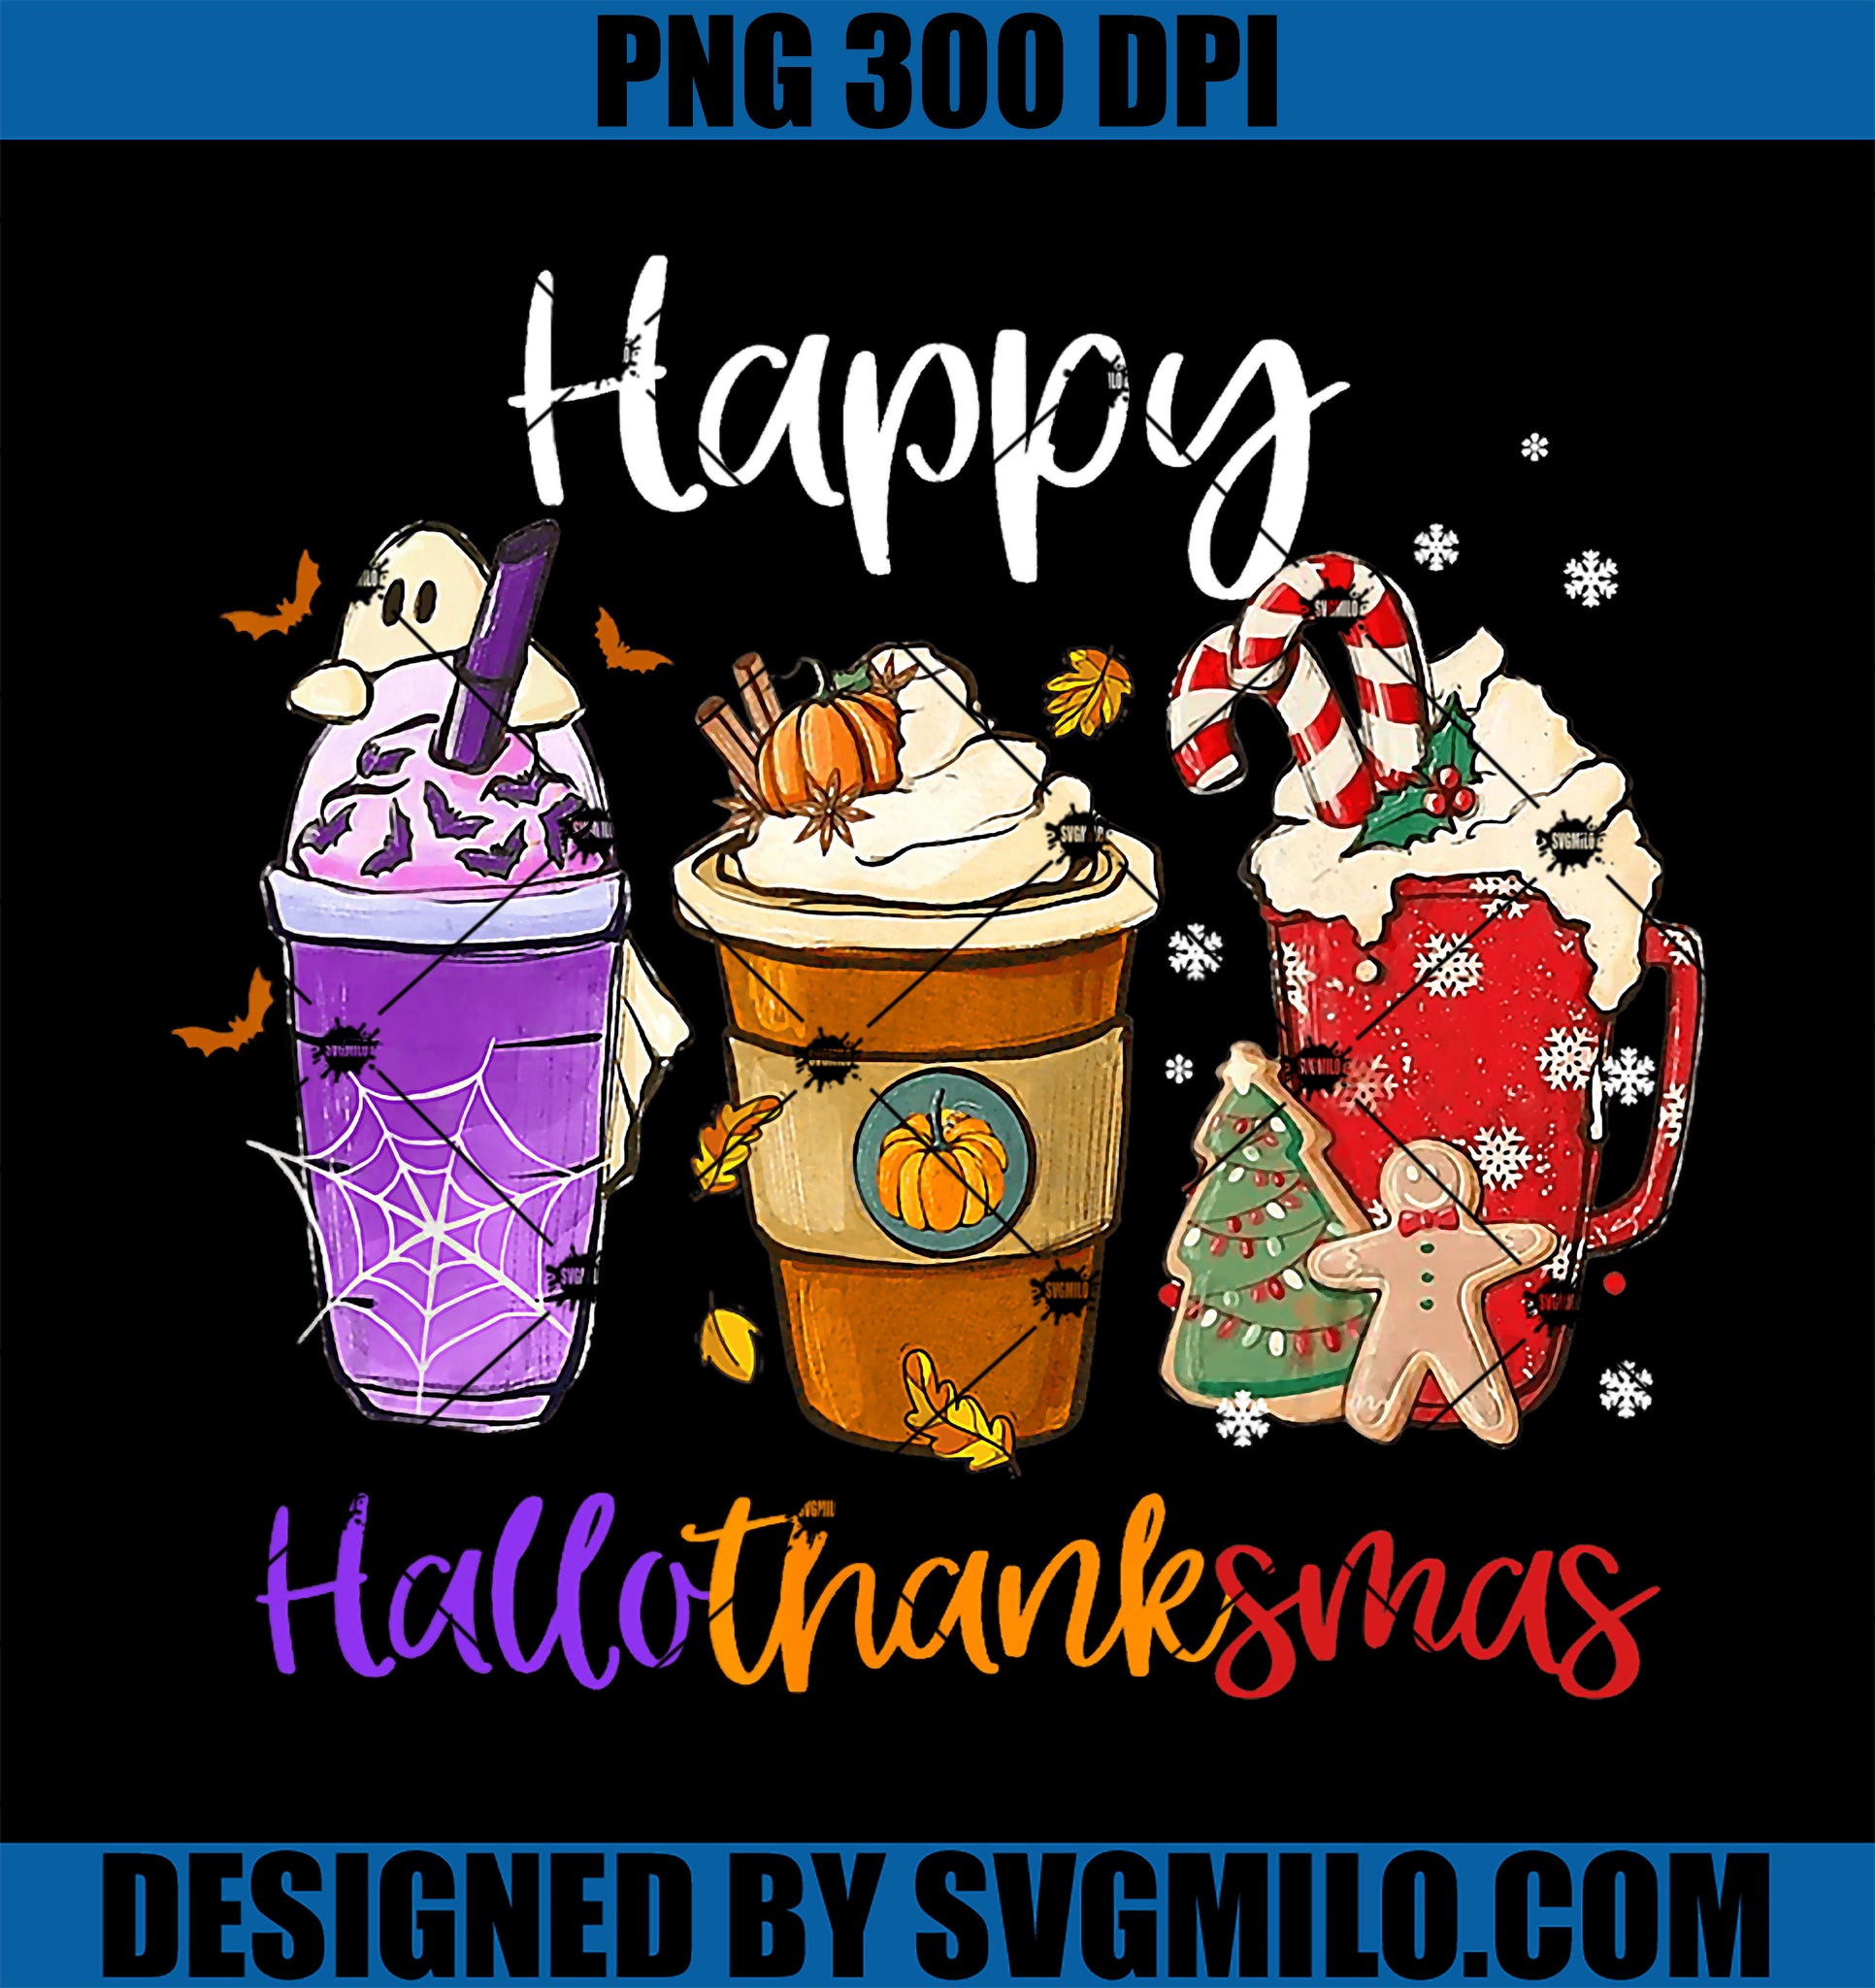 Happy Hallothanksmas Coffee PNG, Coffe PNG, Latte Halloween Thanksgiving PNG